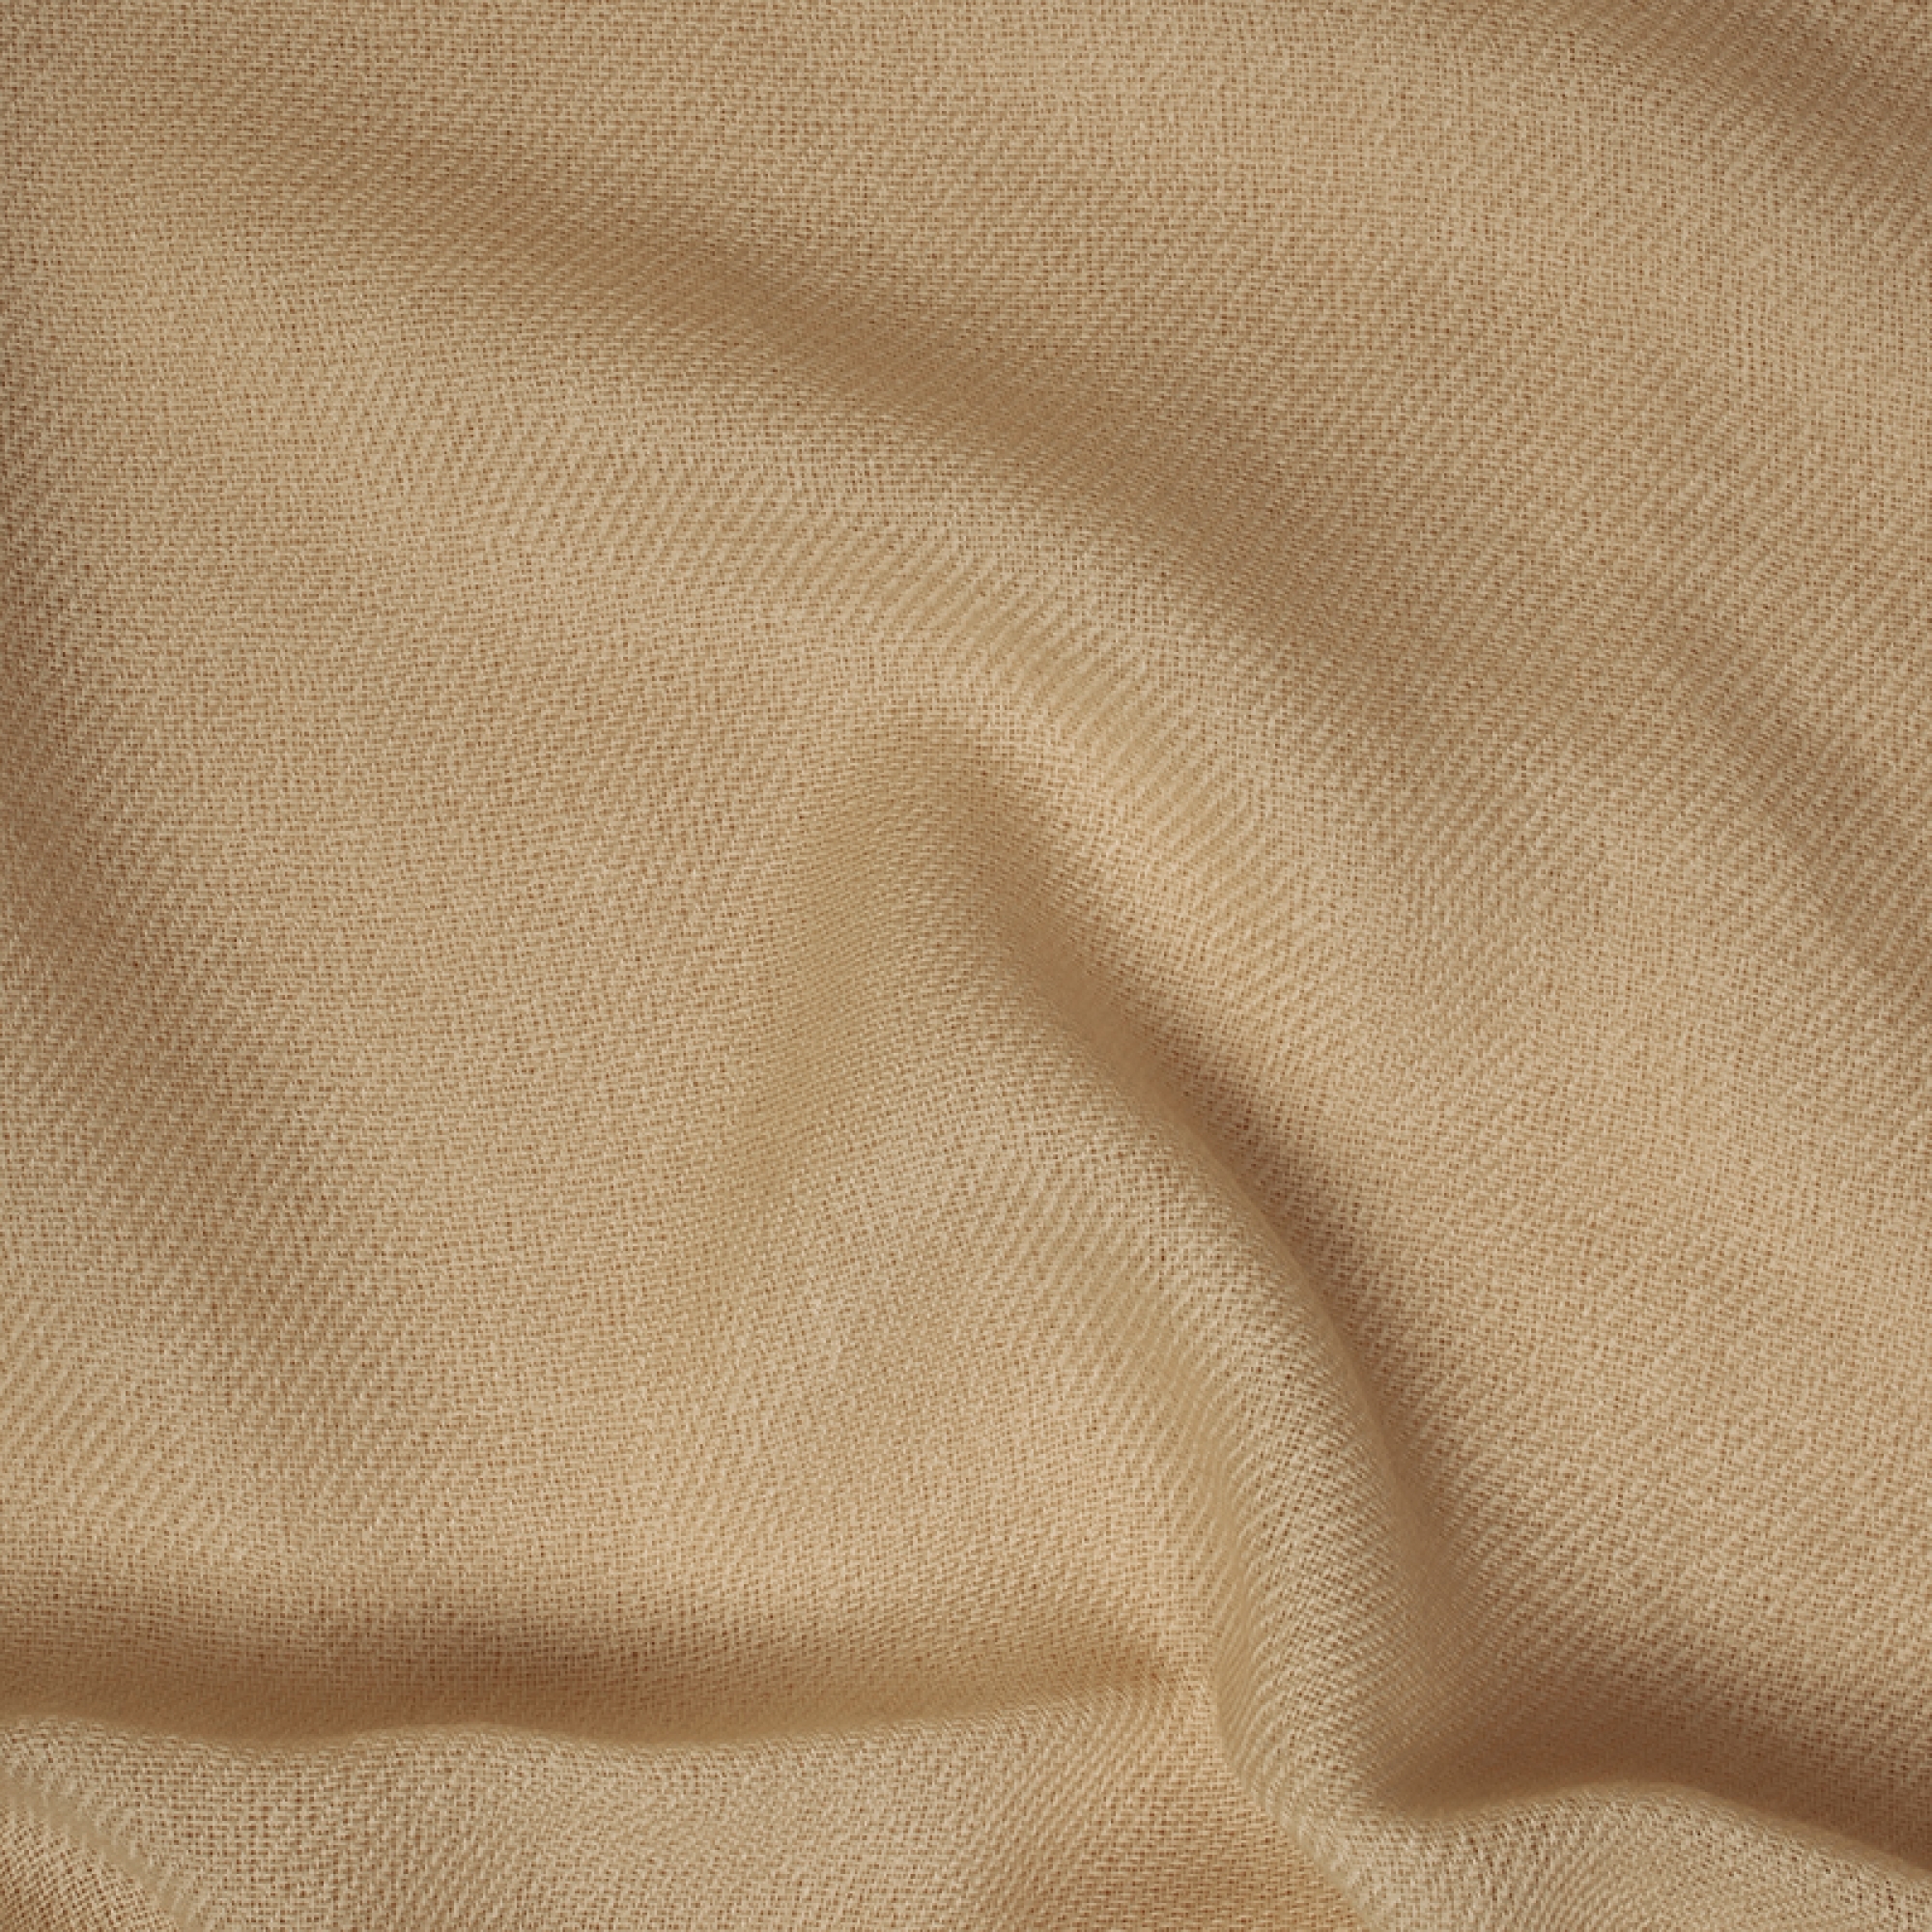 Cashmere accessories blanket toodoo plain l 220 x 220 white smocke 220x220cm